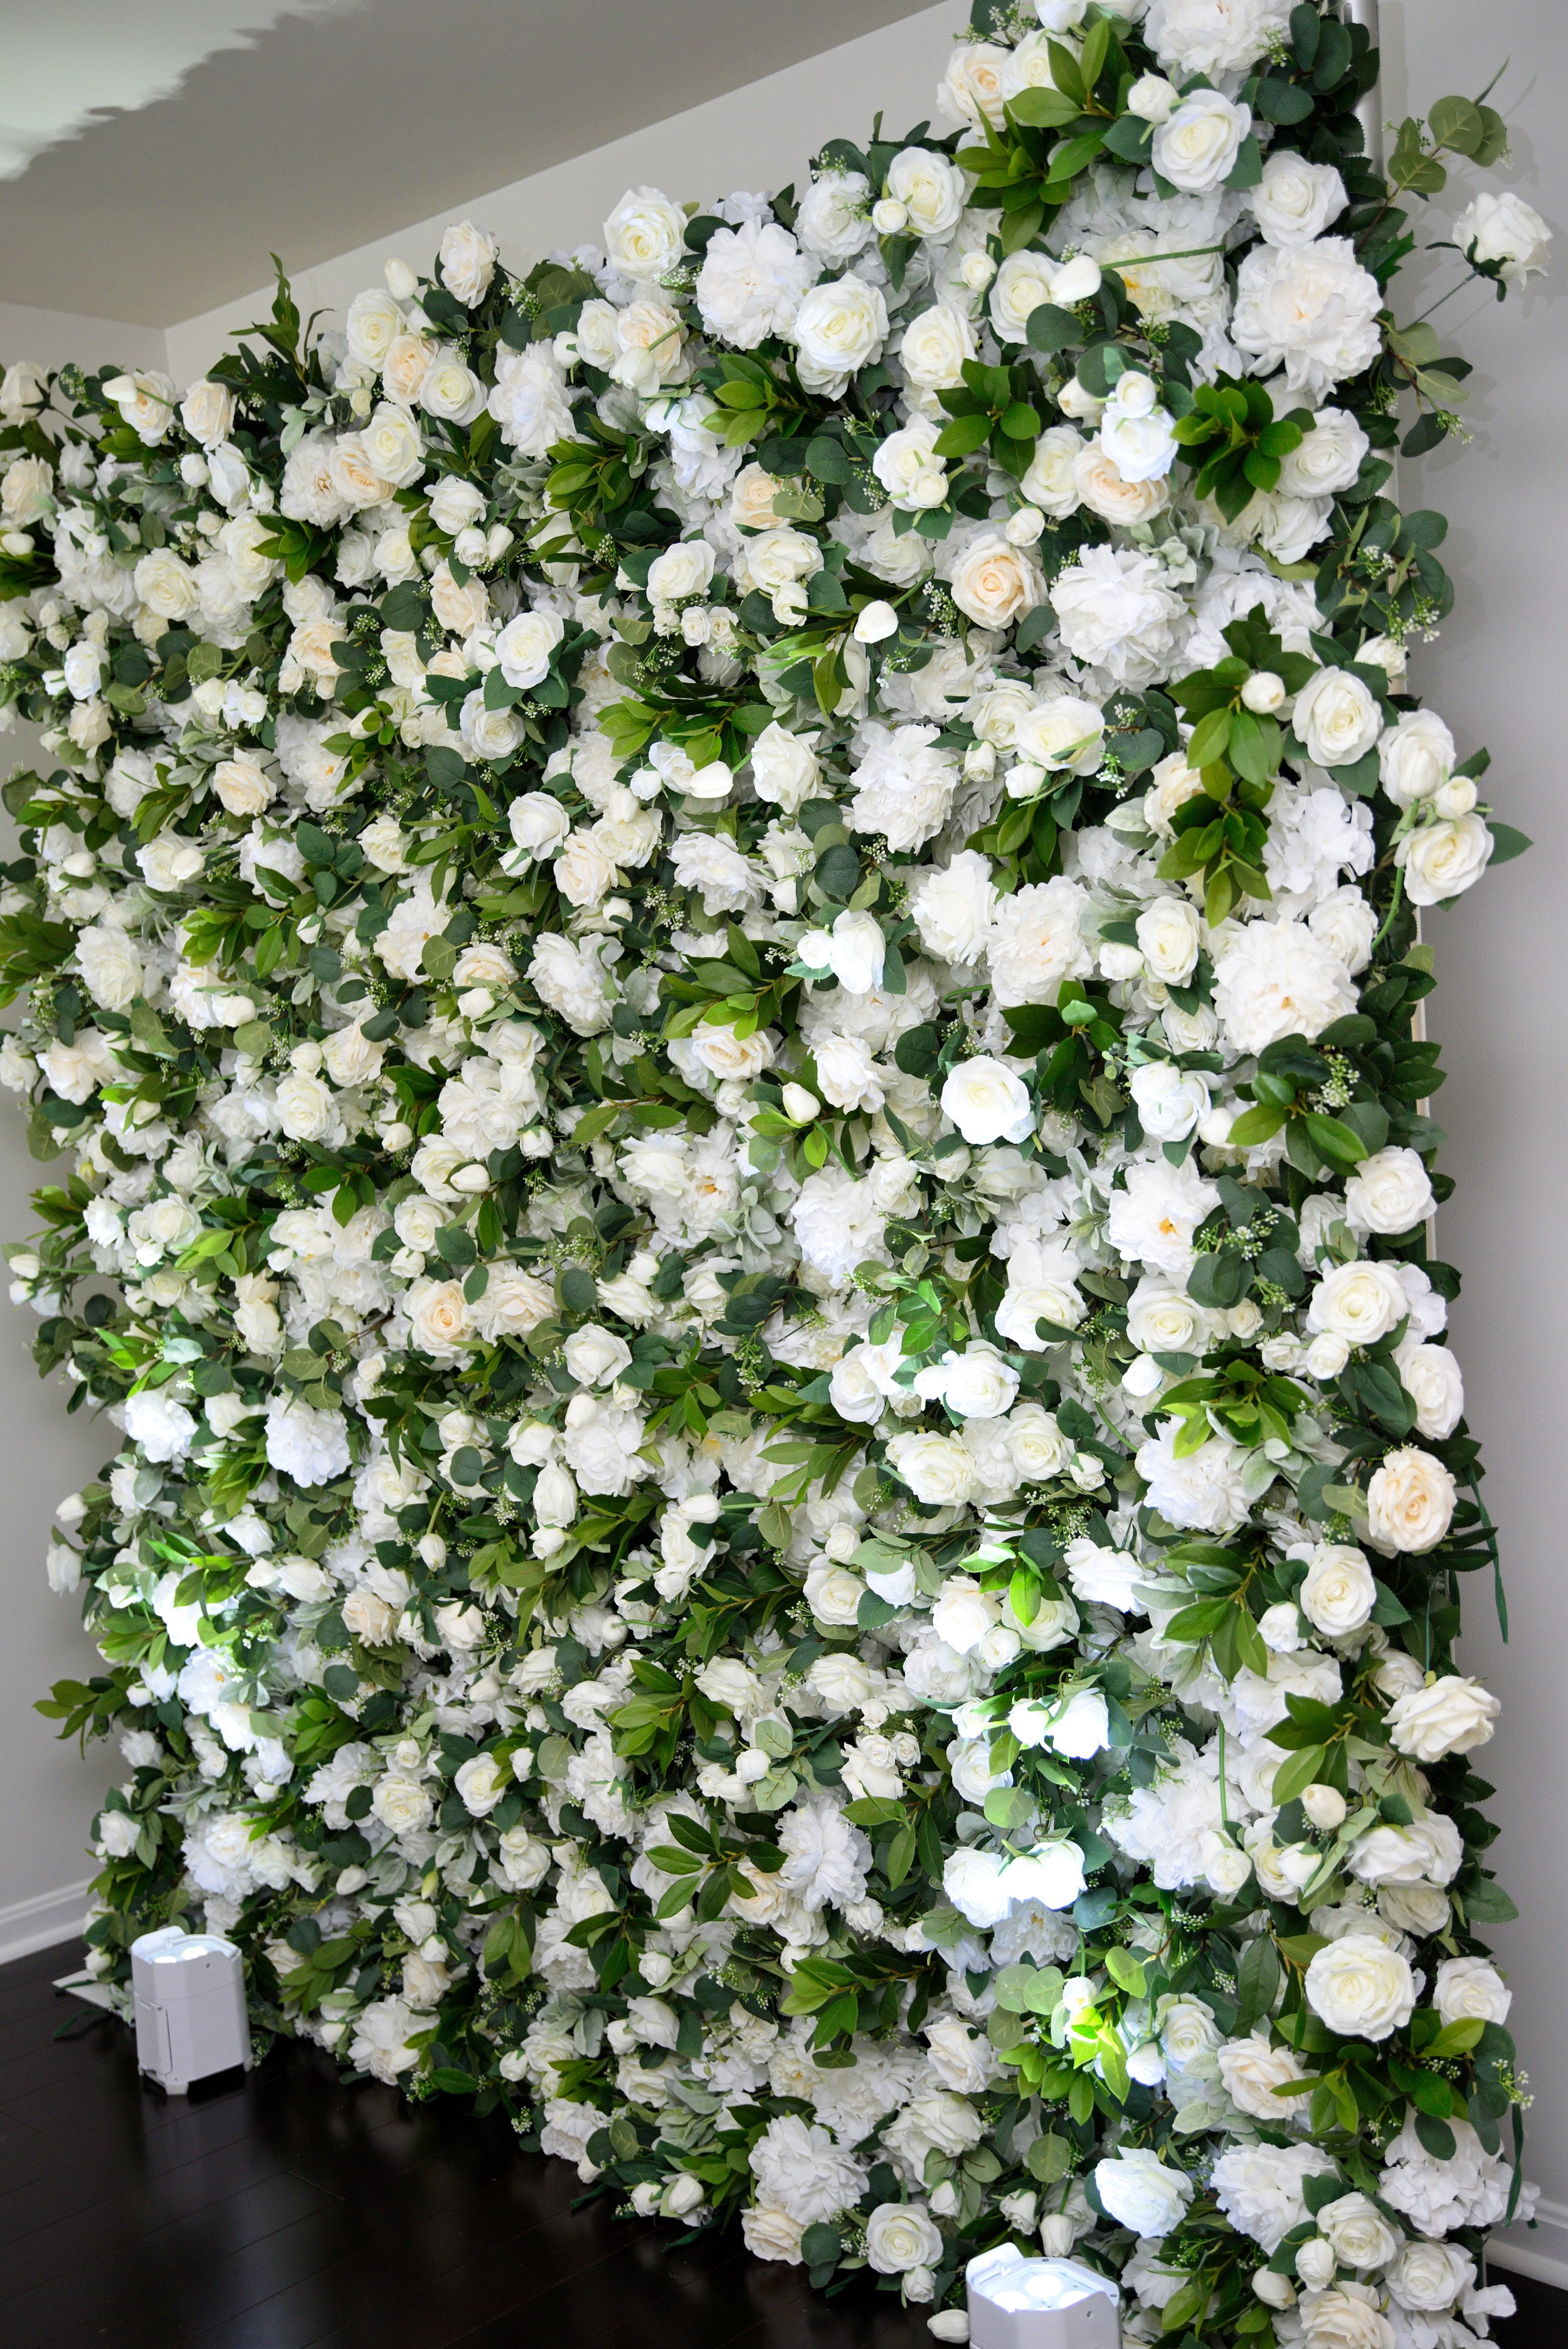 eyeObee PhotoBooth dmv luxury photobooth flower wall 3.jpeg